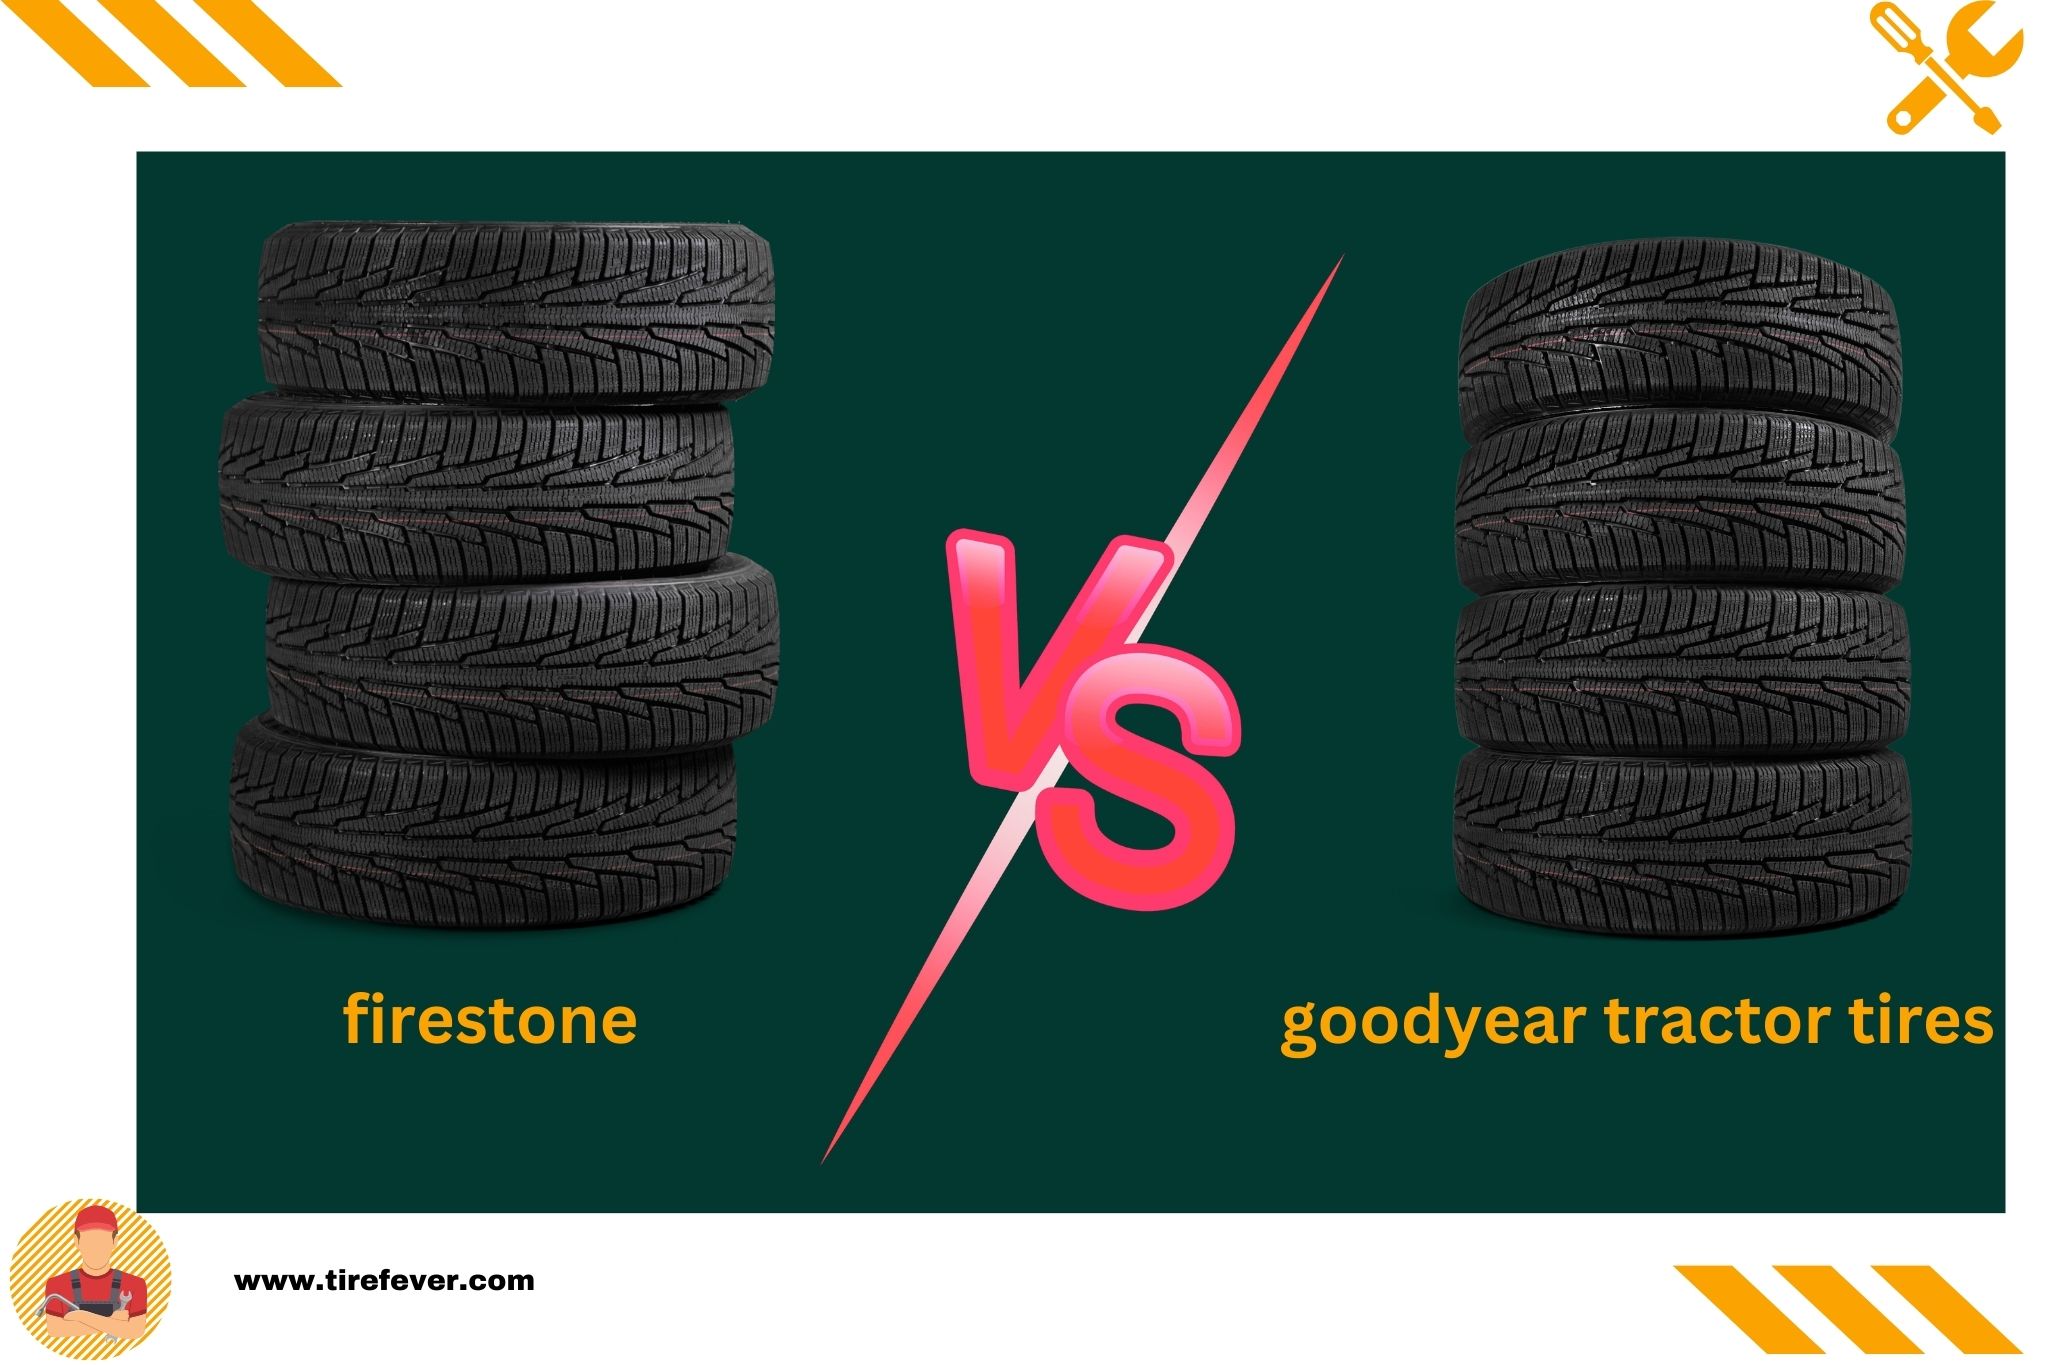 firestone vs goodyear tractor tires